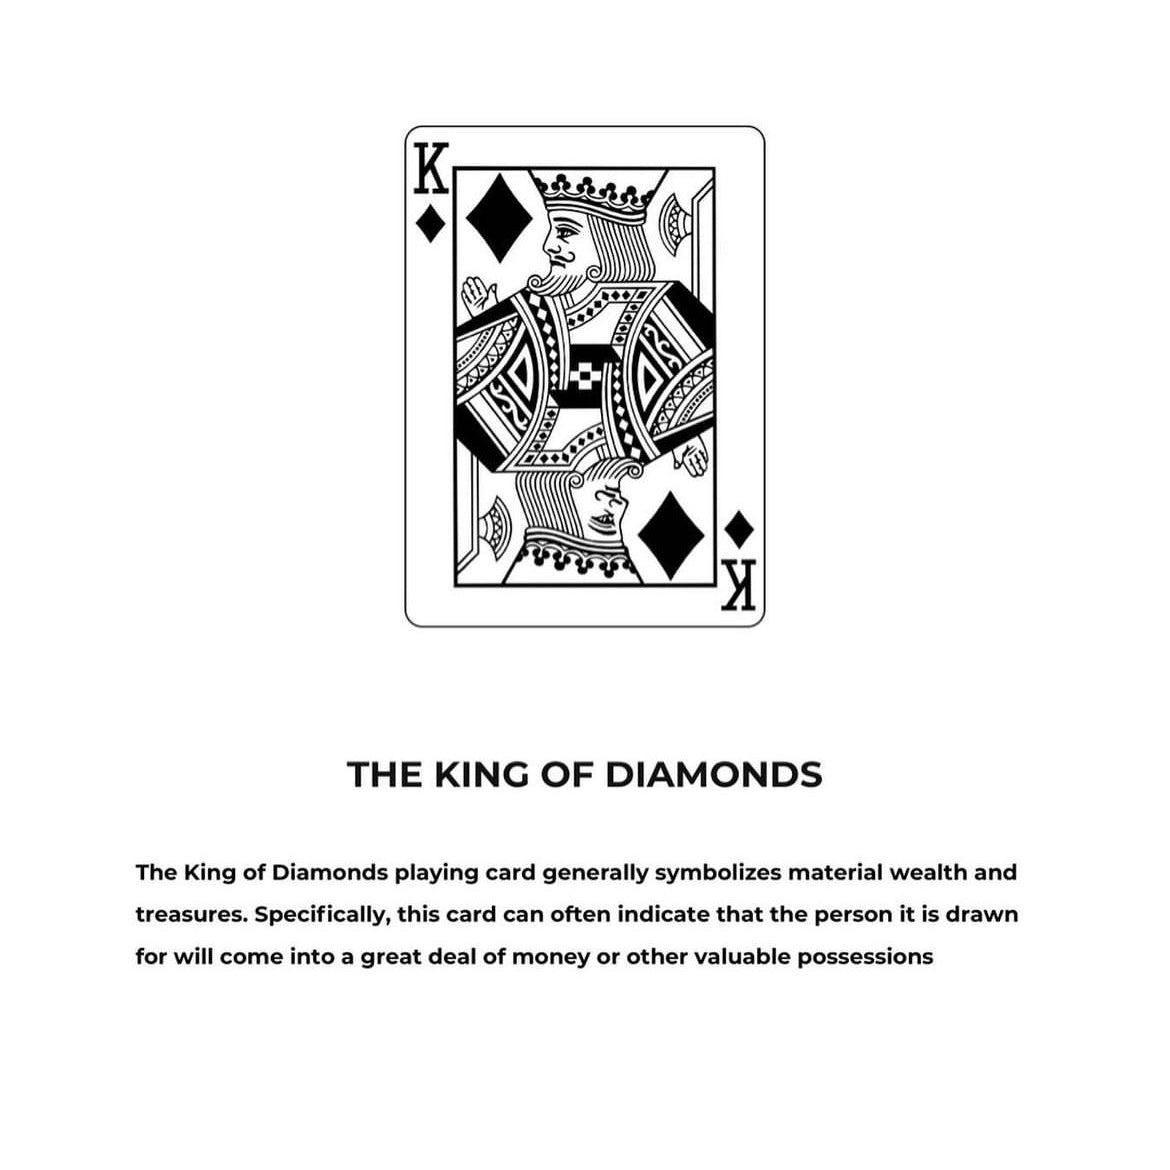 THE KING OF DIAMONDS
